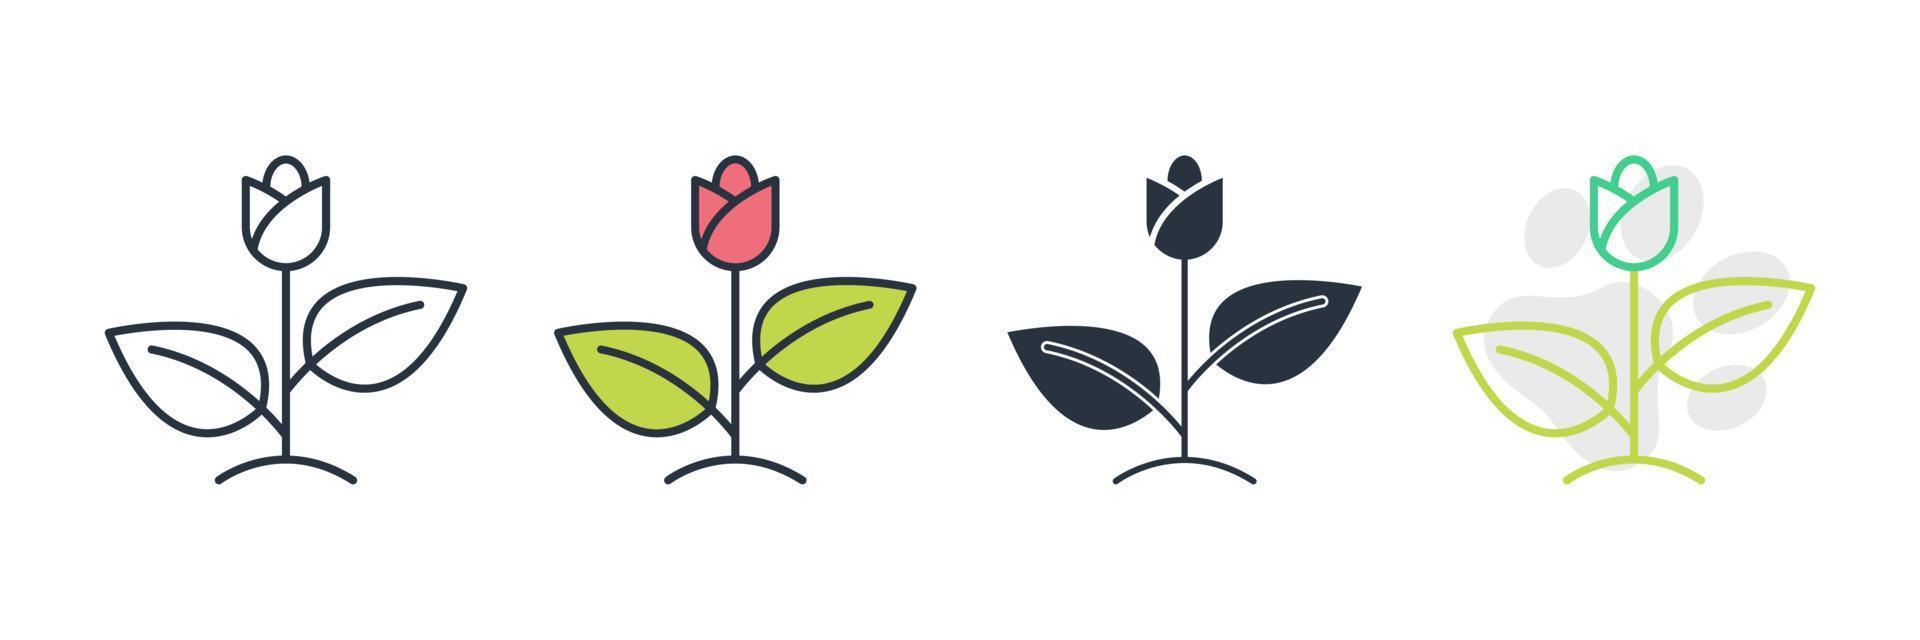 Flora-Symbol-Logo-Vektor-Illustration. Tulpenblumennatur-Symbolschablone für Grafik- und Webdesignsammlung vektor